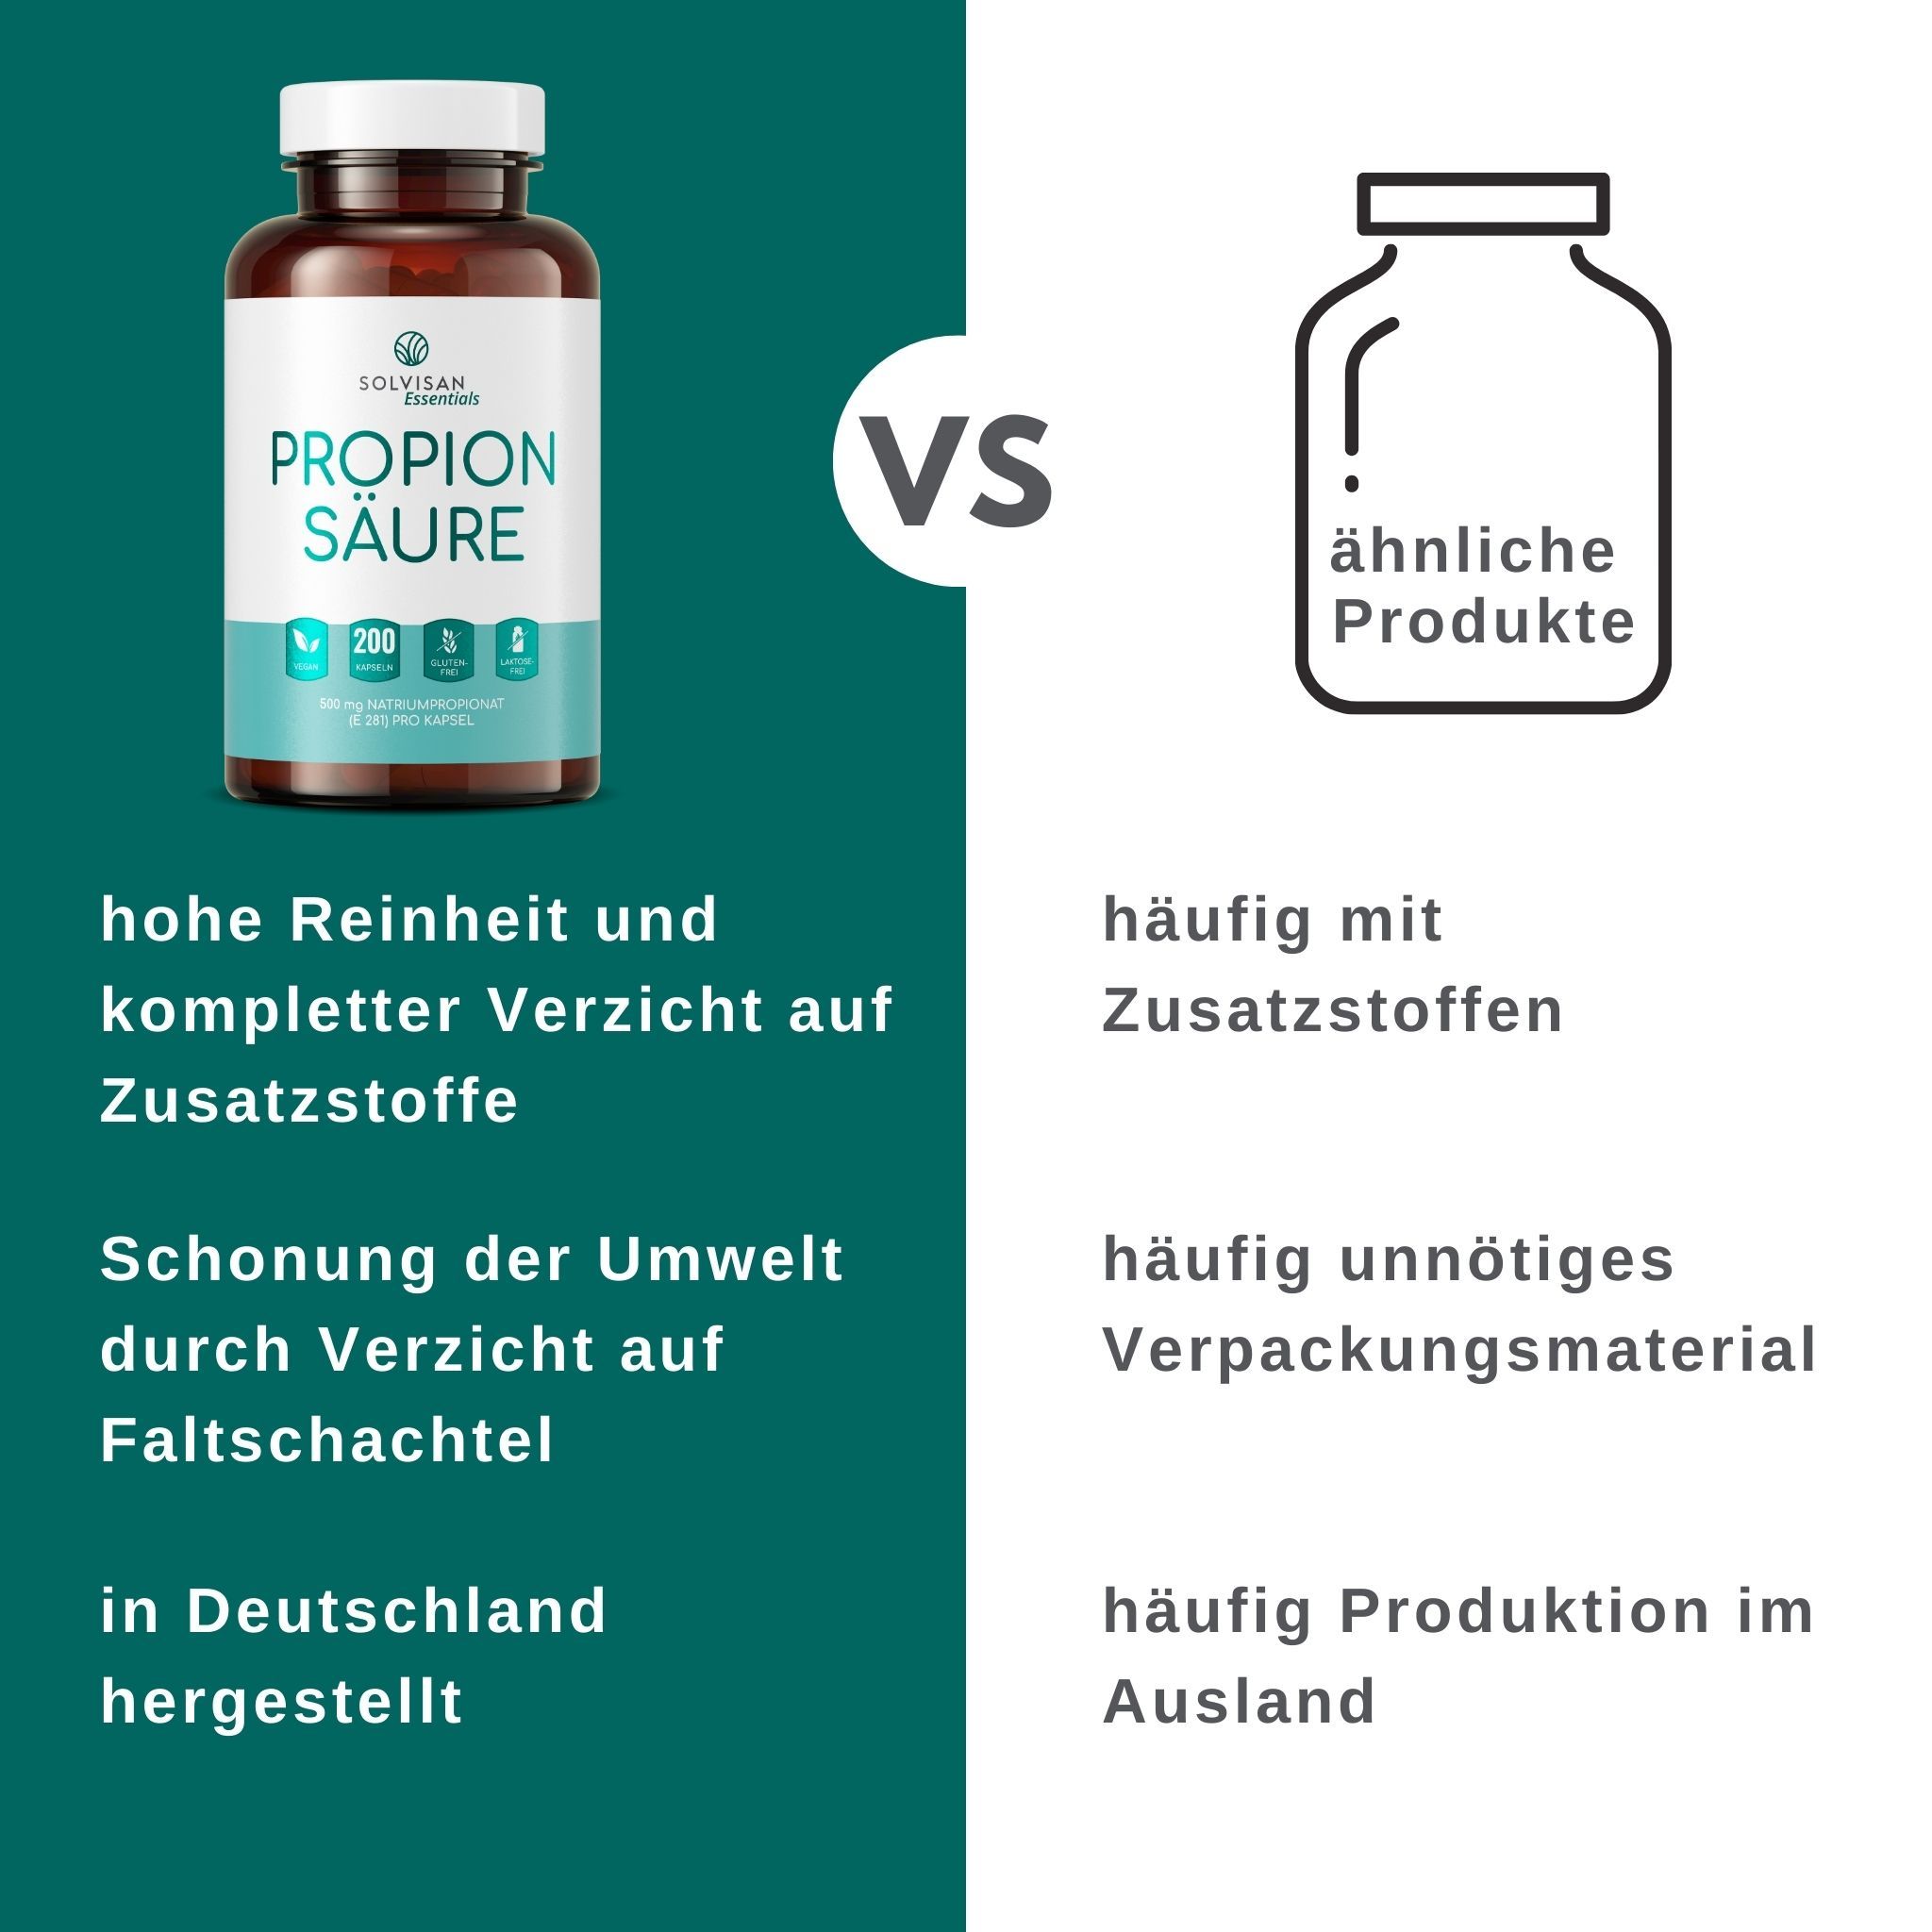 SOLVISAN® Propionsäure 500 mg - in Apotheken-Qualität aus Deutschland - 200 Kapseln